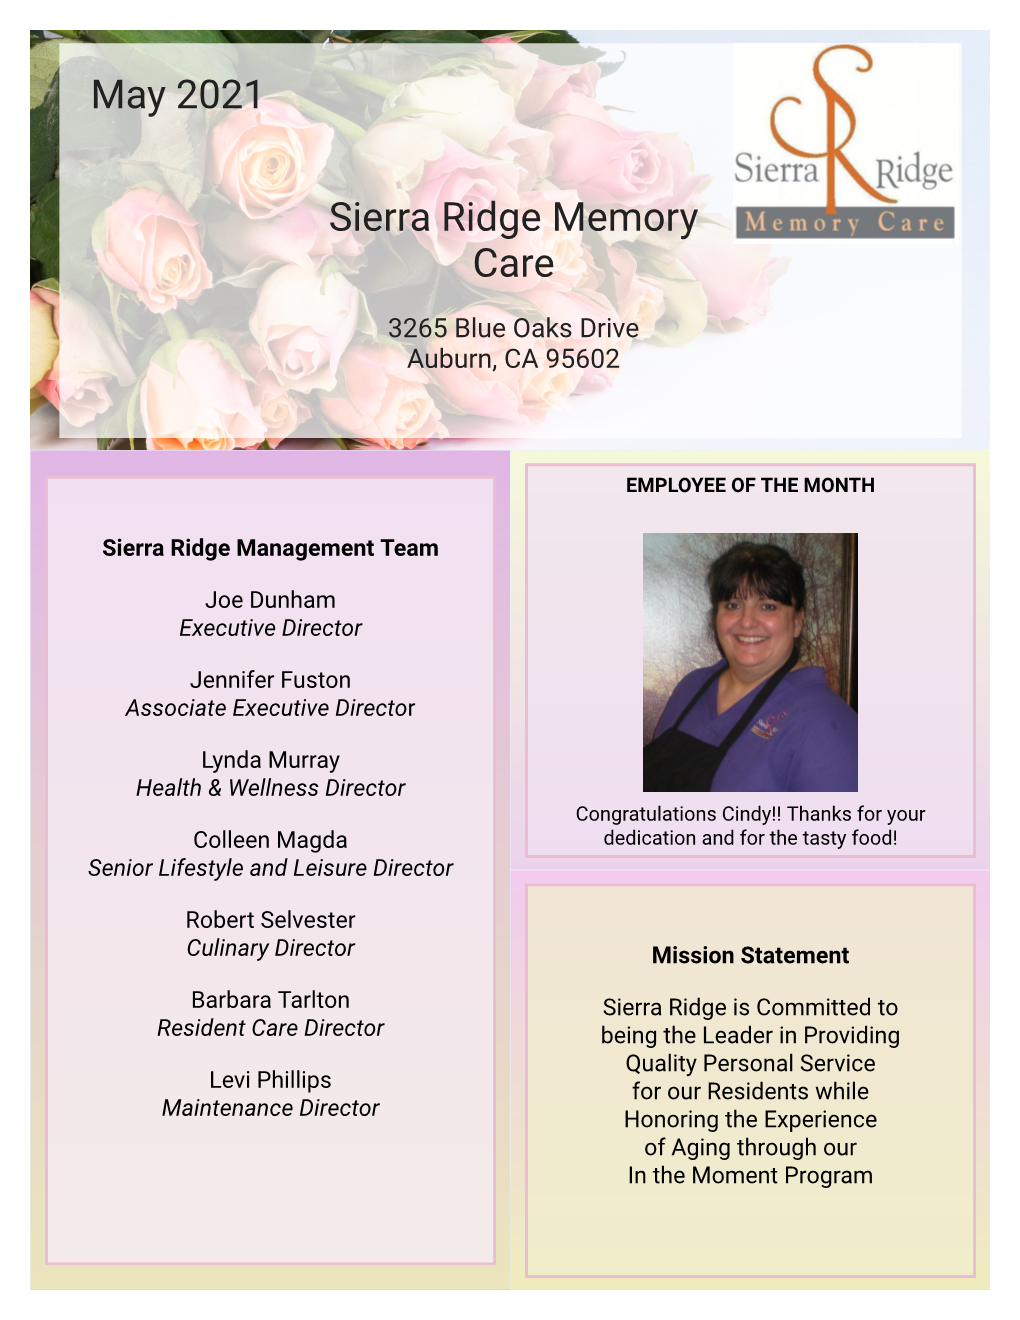 May 2021 Sierra Ridge Memory Care